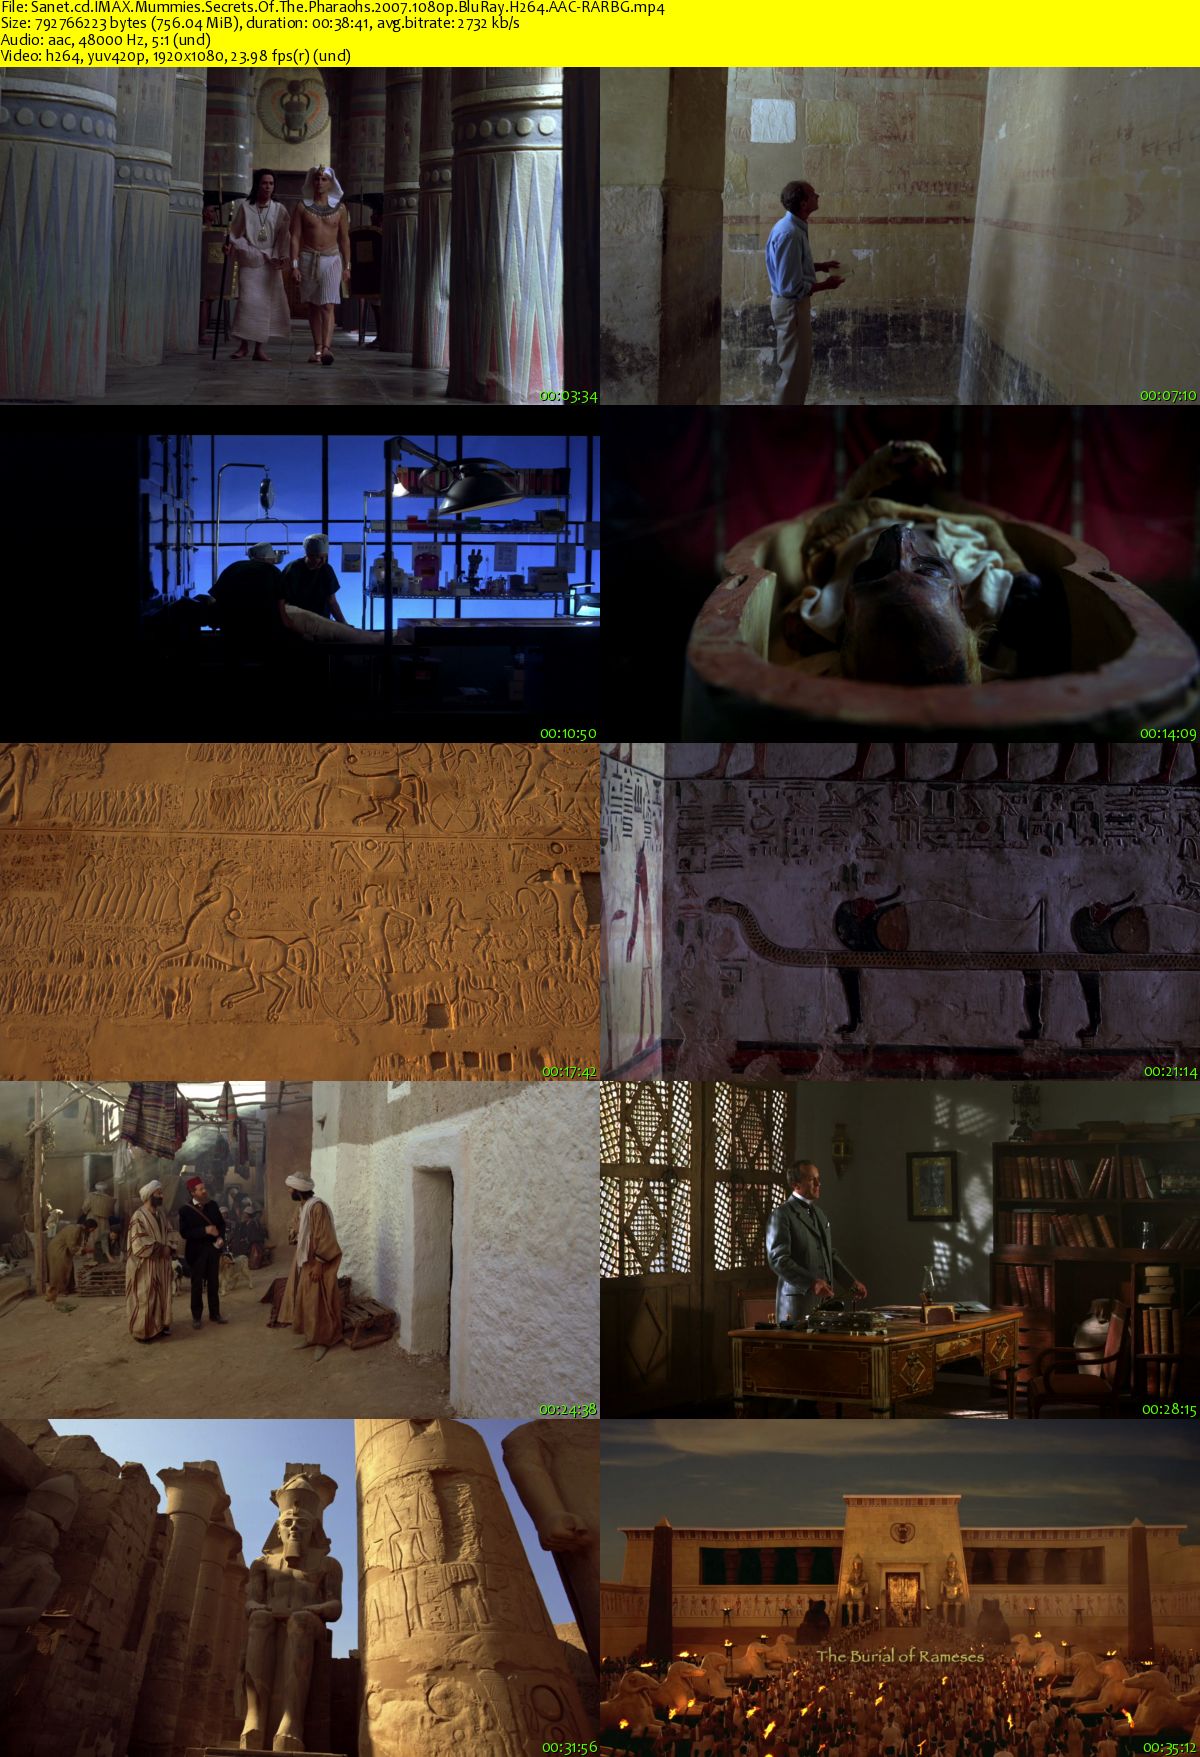 Imax Mummies Secrets Of The Pharaohs 2007 1080p Bluray H264 Aac Rarbg Softarchive